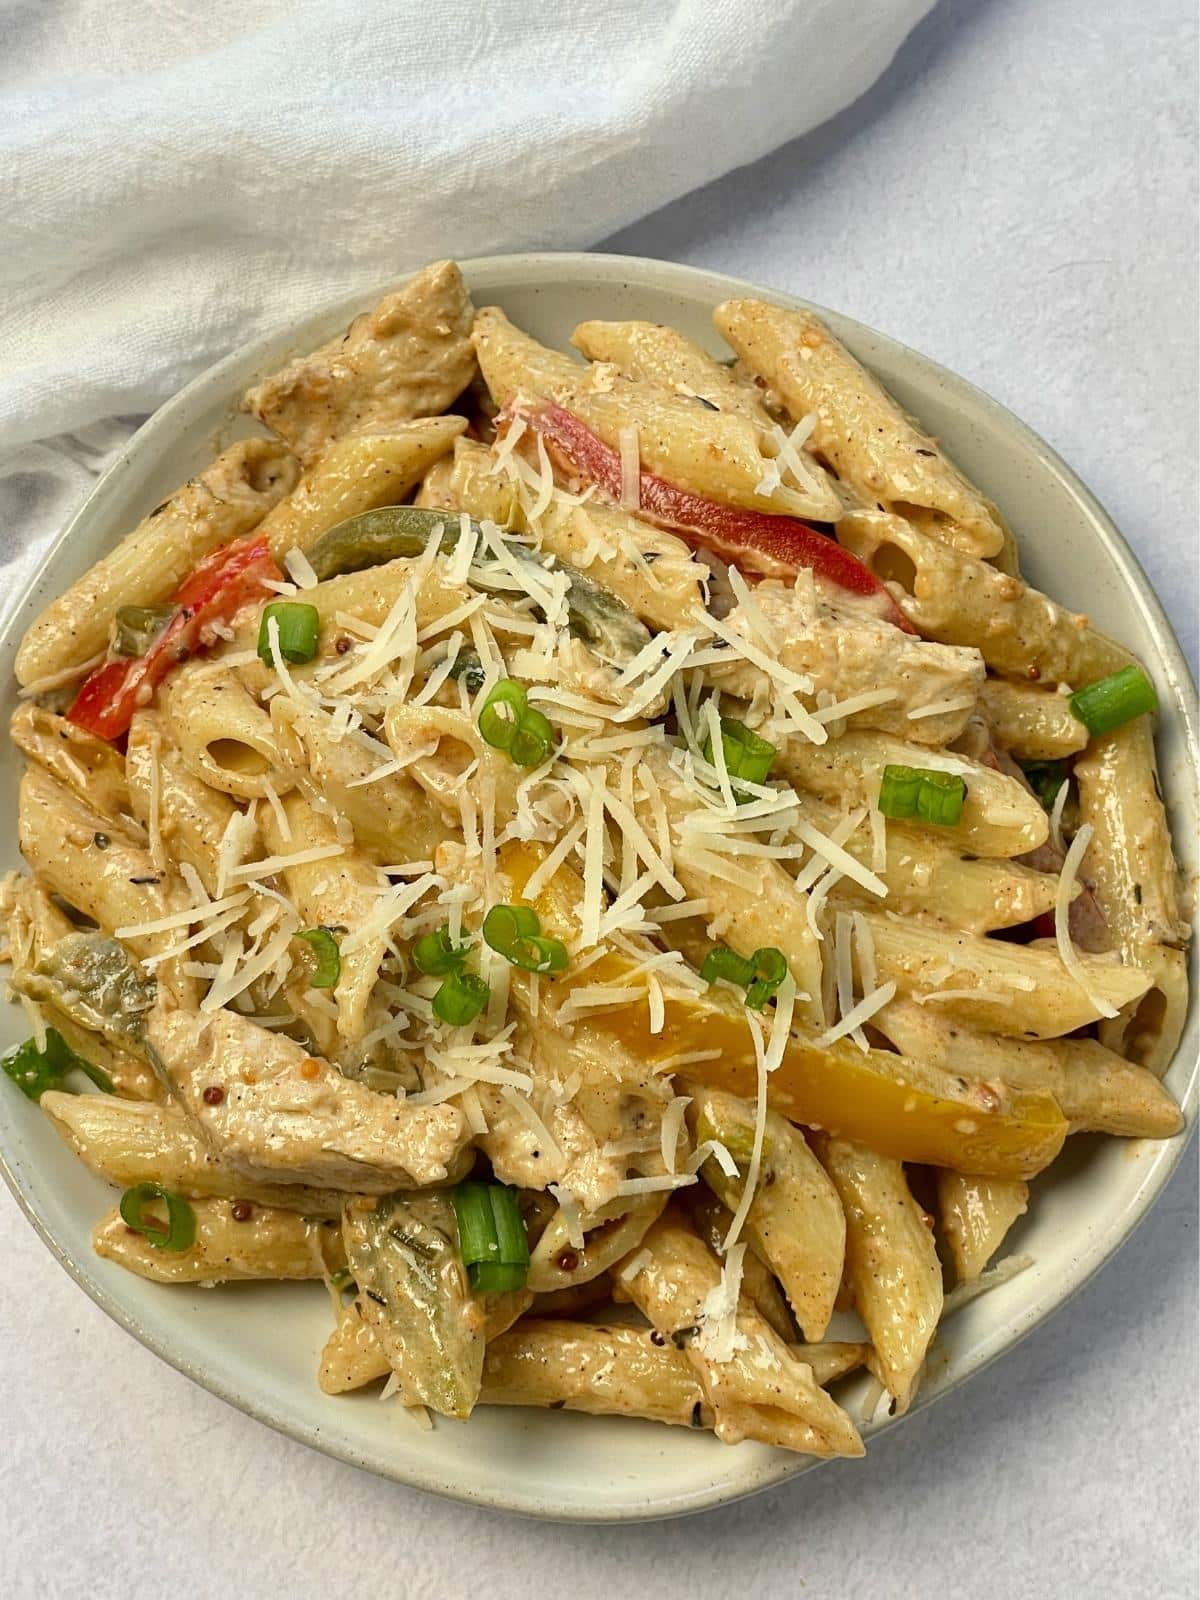 A plate of rasta pasta.